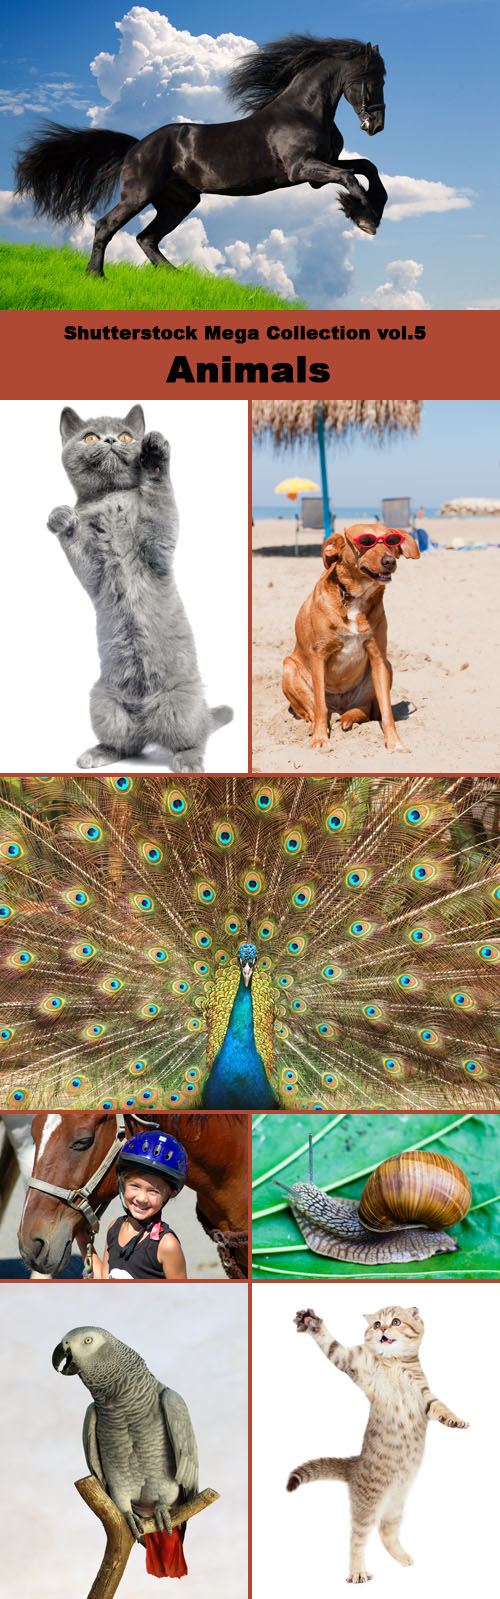 Shutterstock Mega Collection vol.5 - Animals